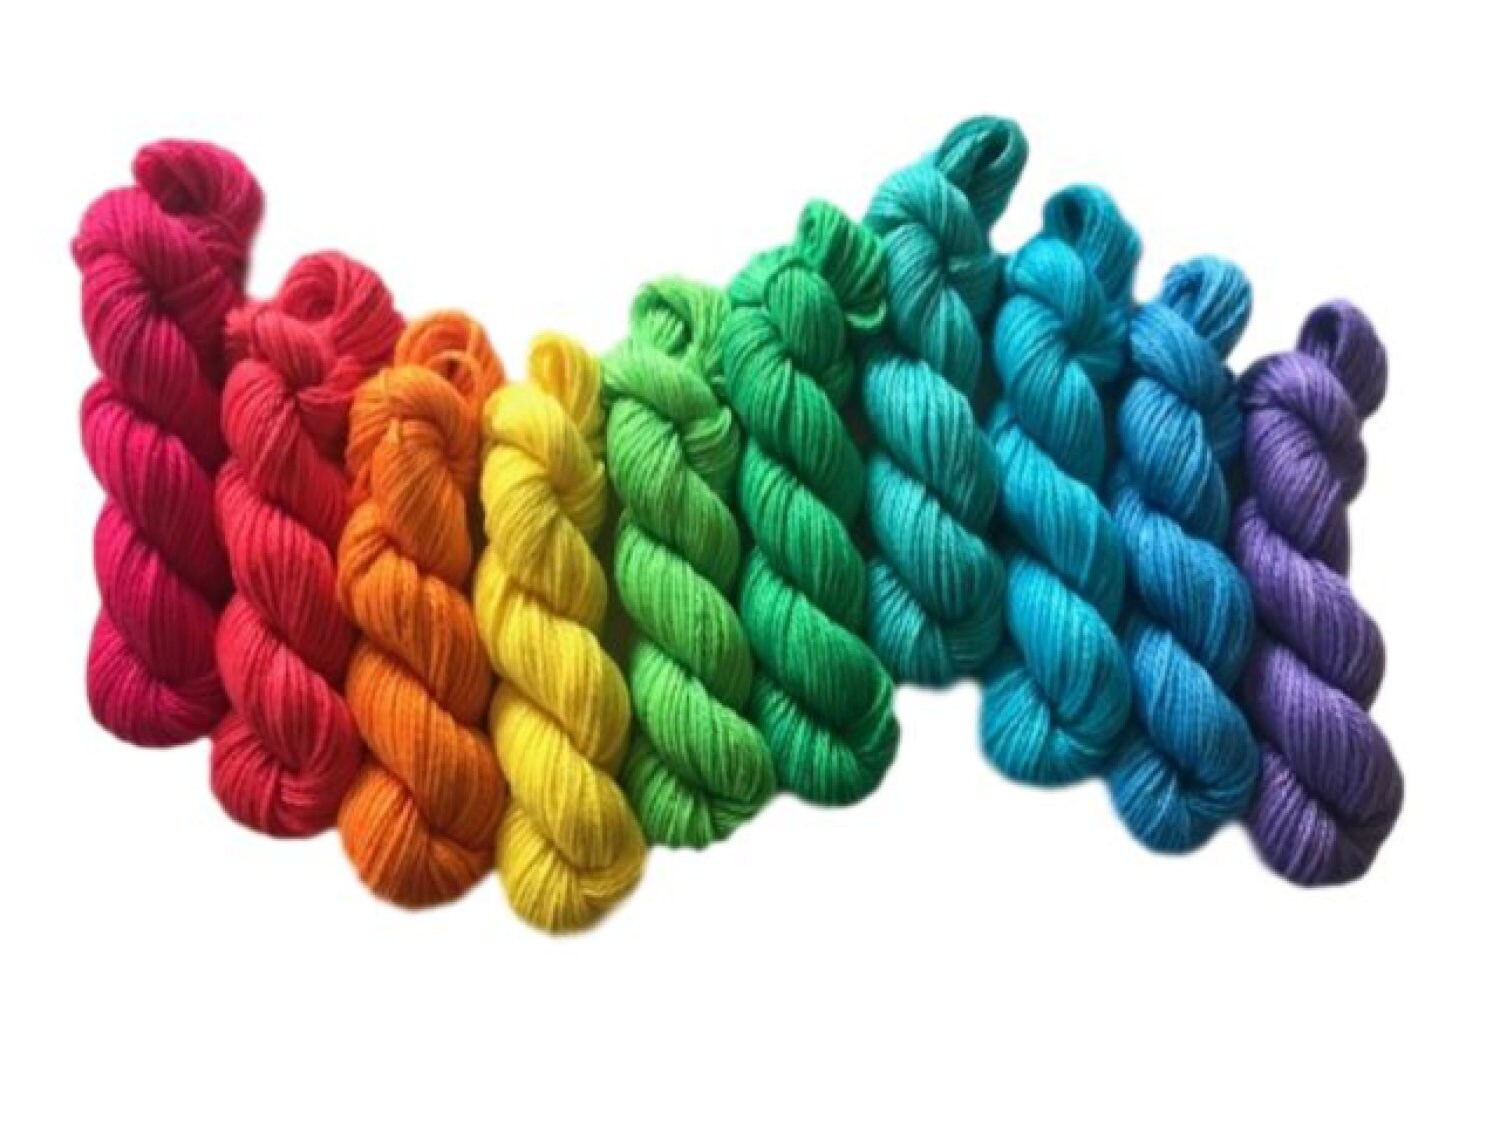 Rainbow Vegan Yarn Kit - DK Hand Dyed Semi Solid Mini Skeins - 10 Colors (53 yd skeins) - Bamboo Cotton Artisan Tonal Yarn - 3 Ply Sport Wt